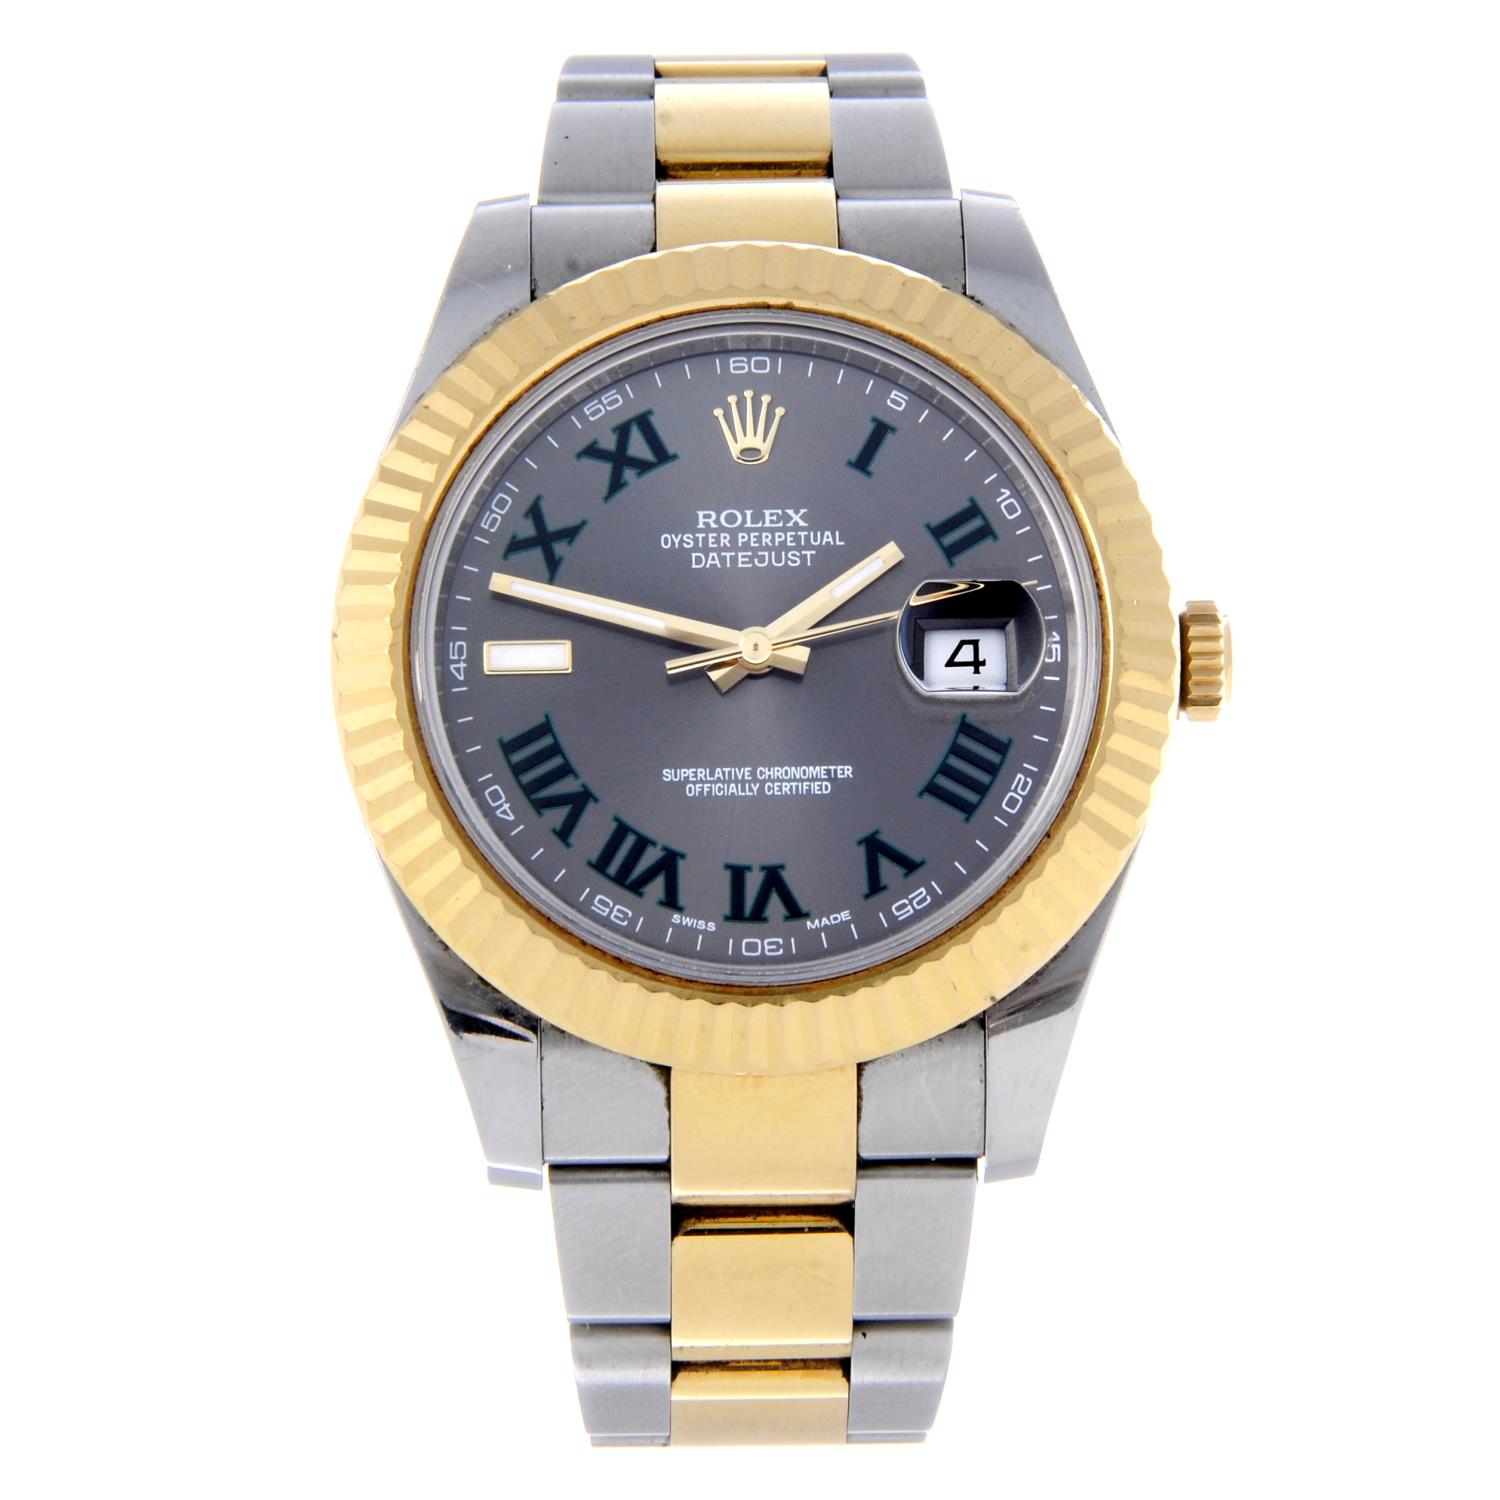 ROLEX - a gentleman's Oyster Perpetual Datejust II bracelet watch.